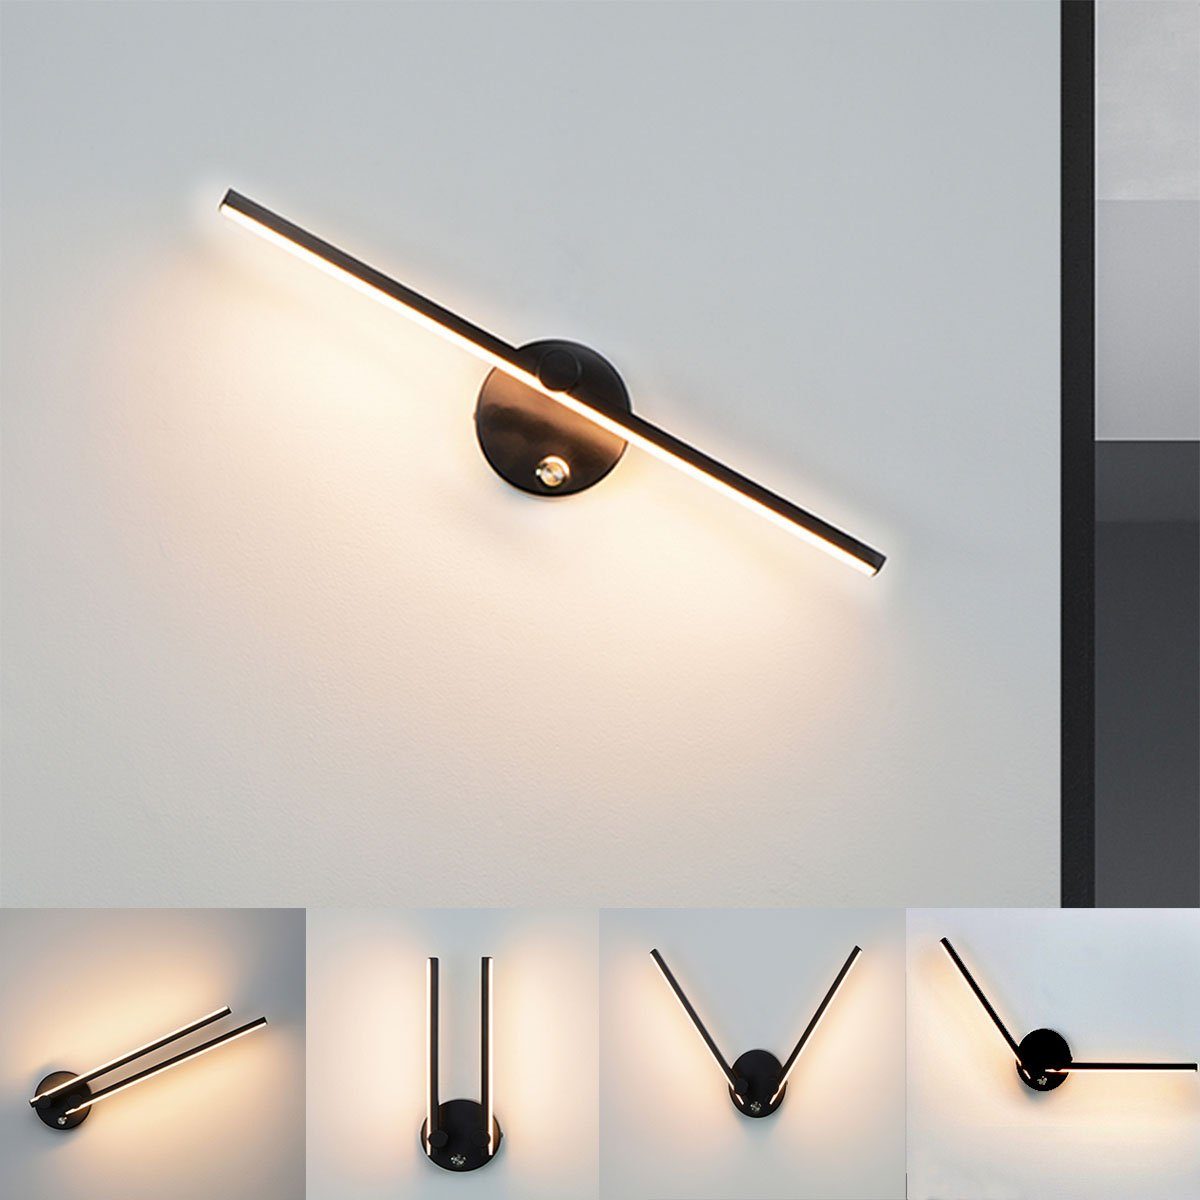 oyajia Wandleuchte LED Wandleuchte, 12W Wand Lichter mit Einstellbar Лампыarm, 53cm, LED fest integriert, Warmweiß, Nordic Wandleuchte